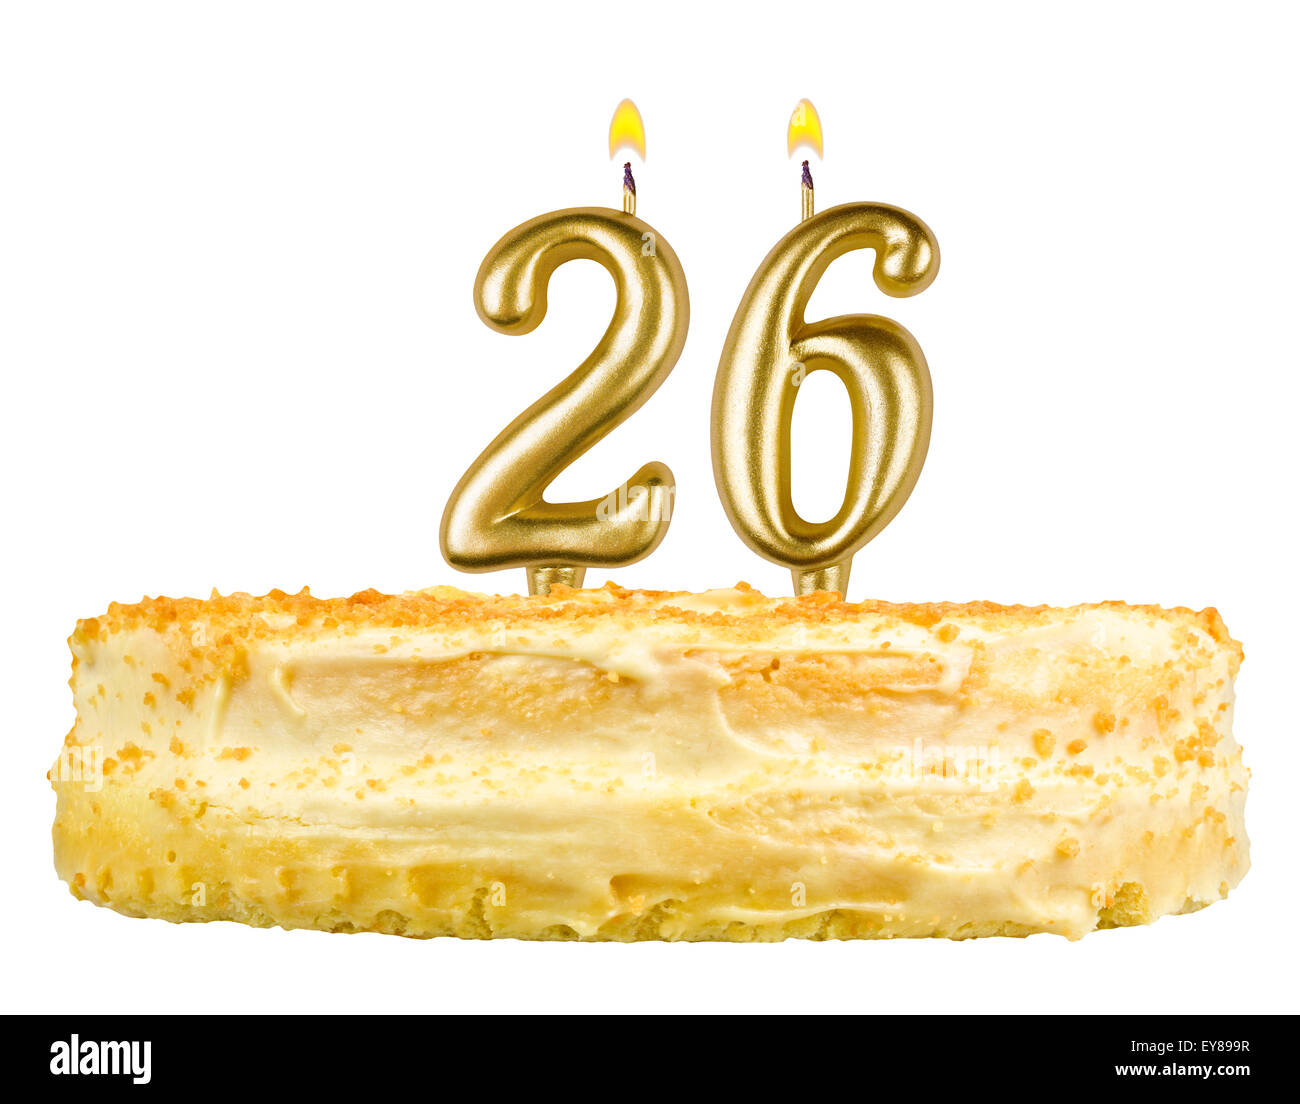 birthday cake with candles number twenty six isolated on white background  Stock Photo - Alamy